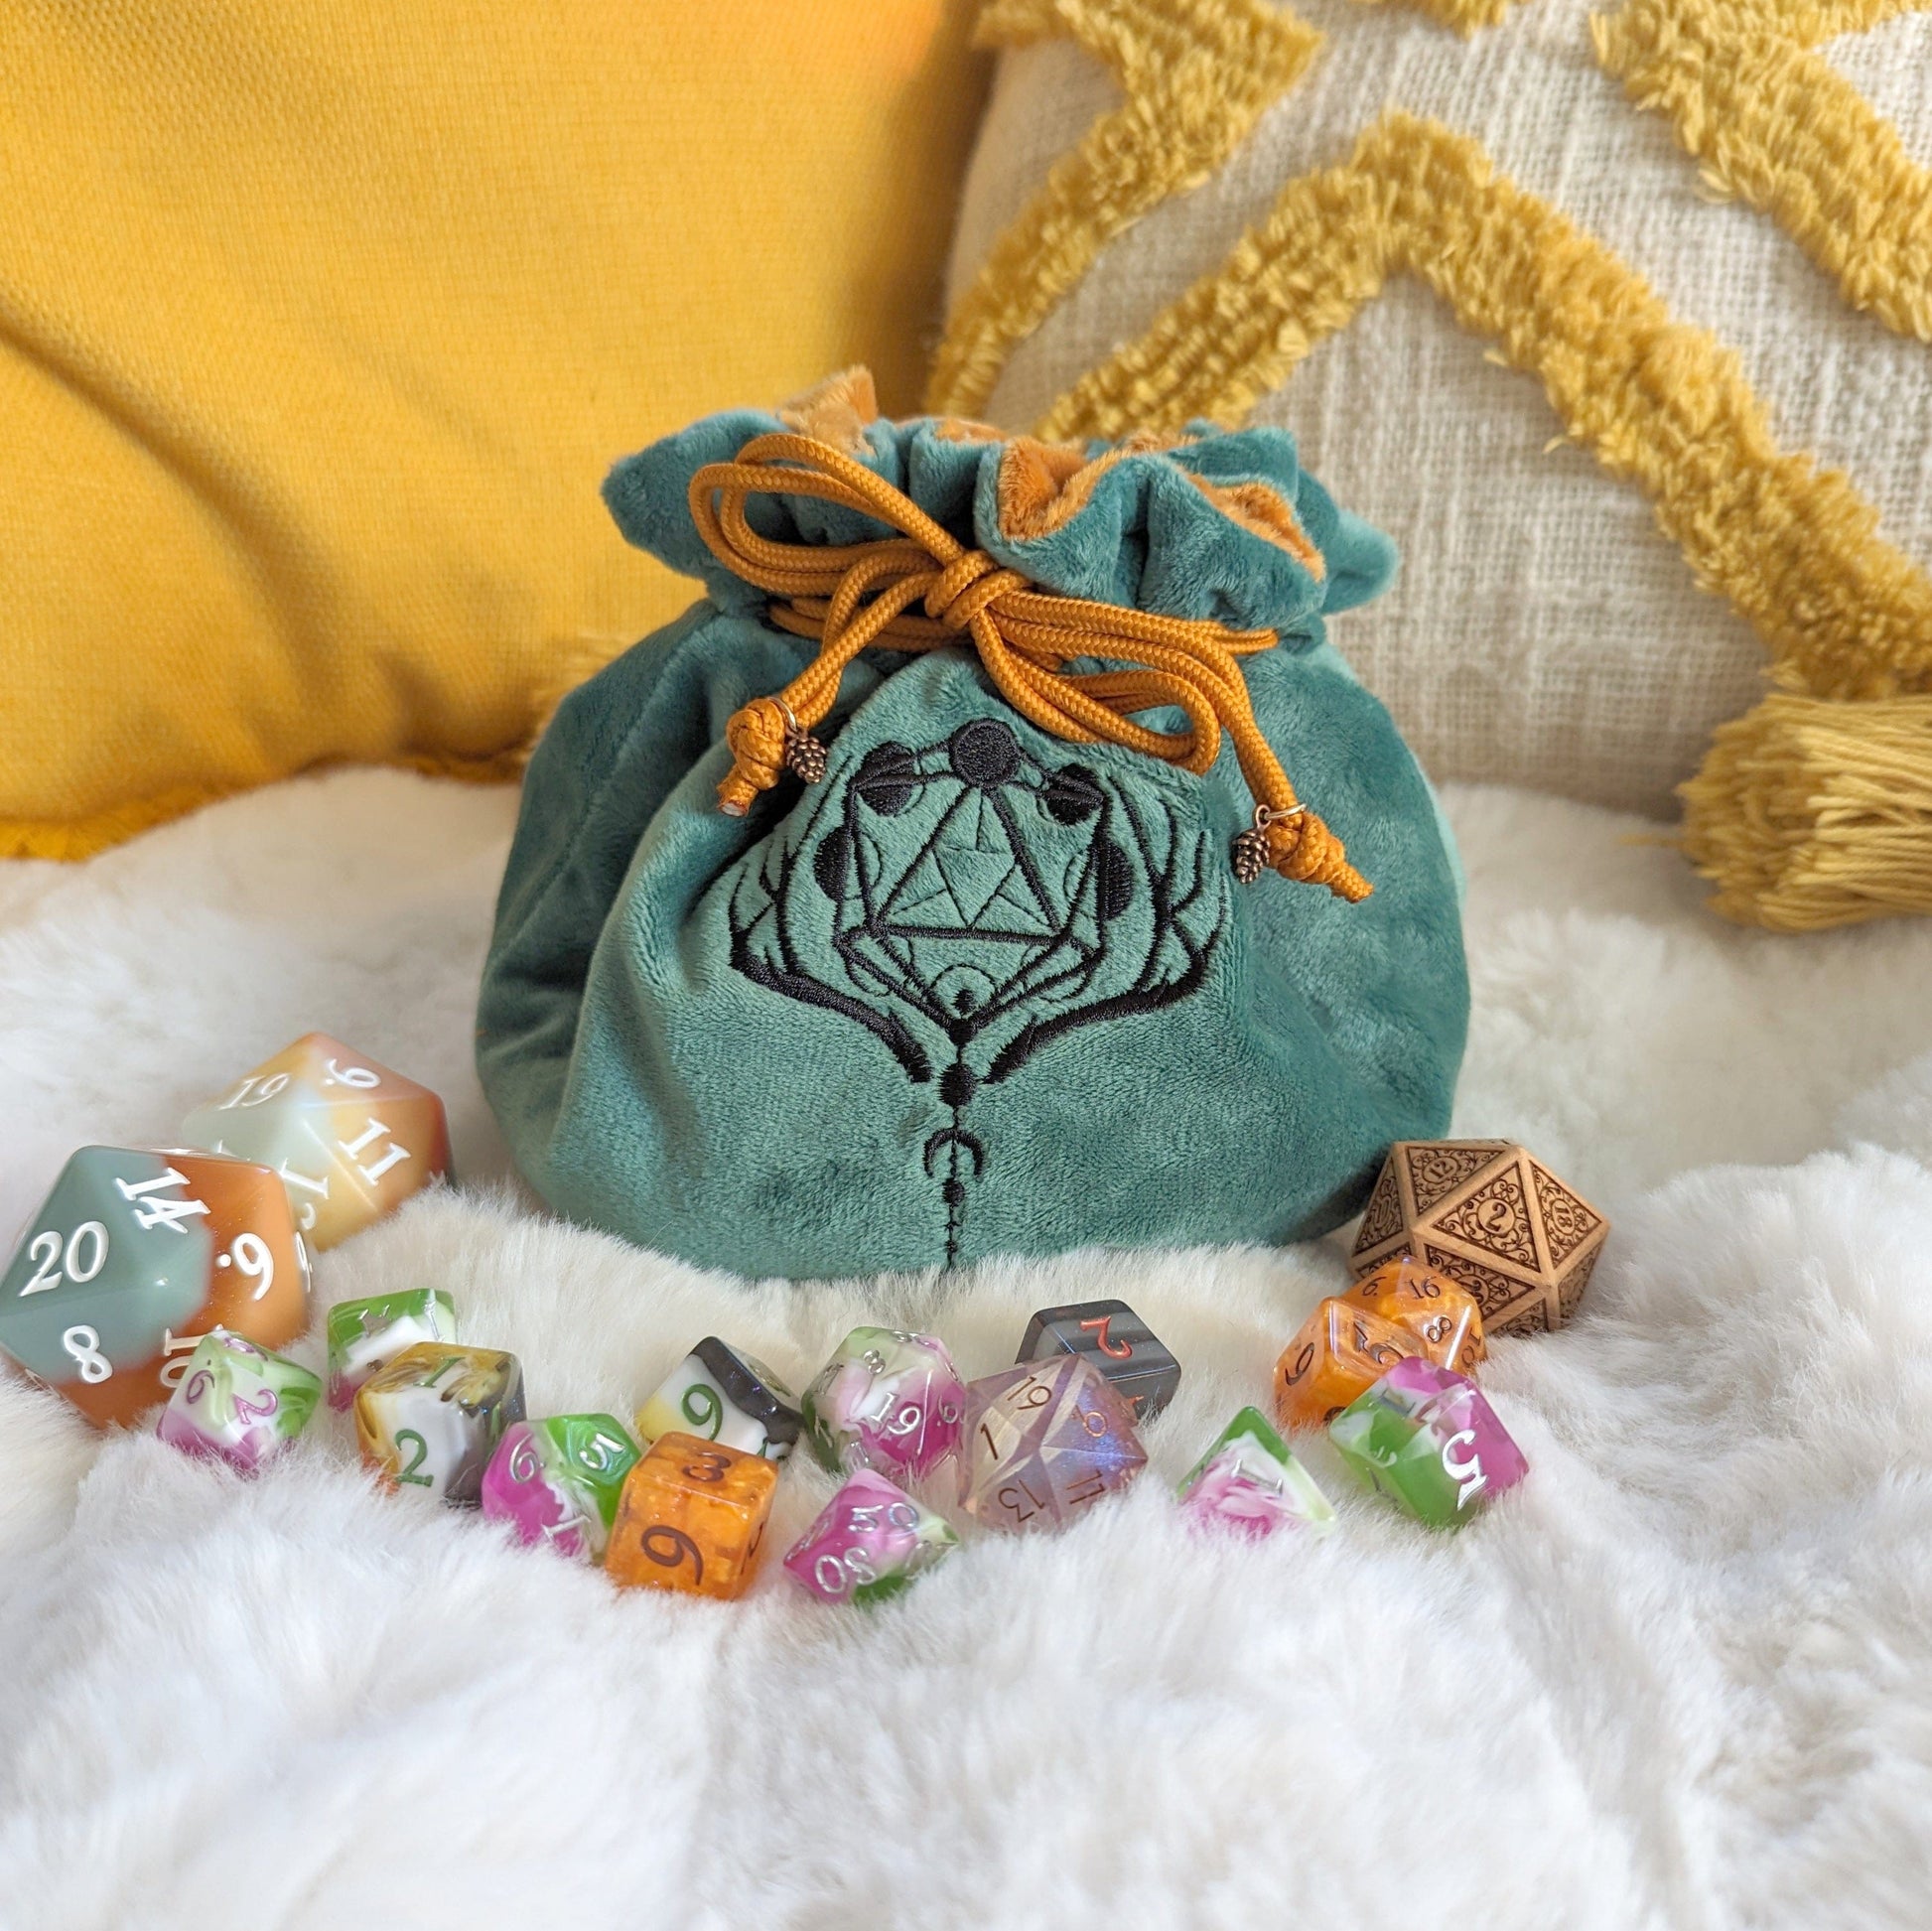 Druid dice bag. Multi pocket large dice bag in green and brown